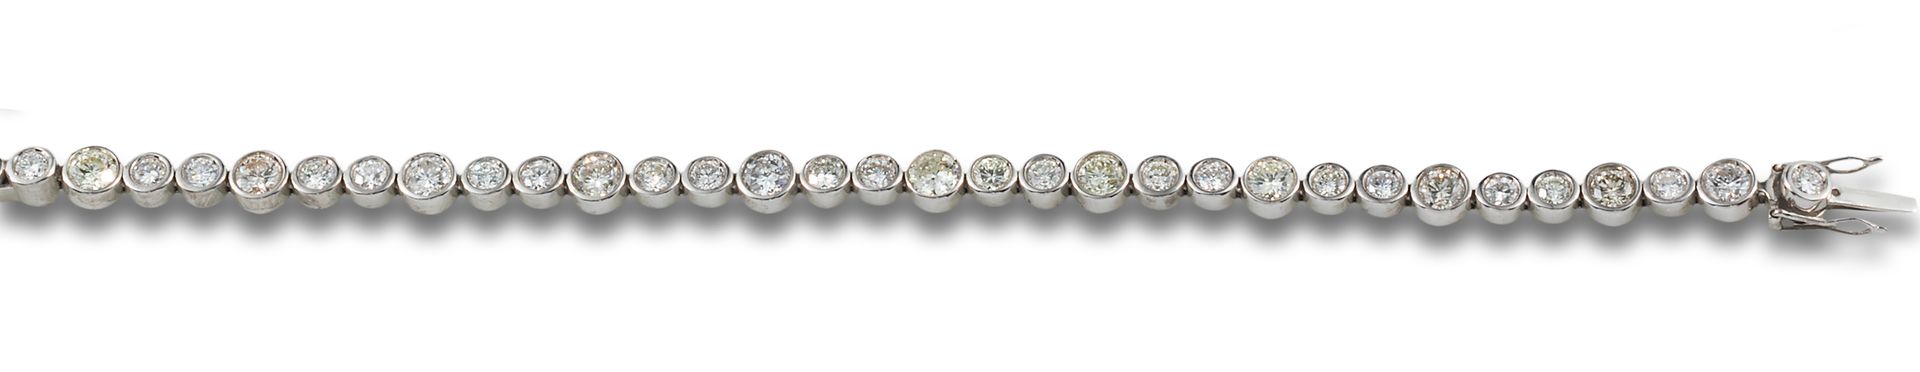 18 kt white gold riviere bracelet. 由一排镶嵌在chaton的钻石形成，估计总重量为7.80克拉。